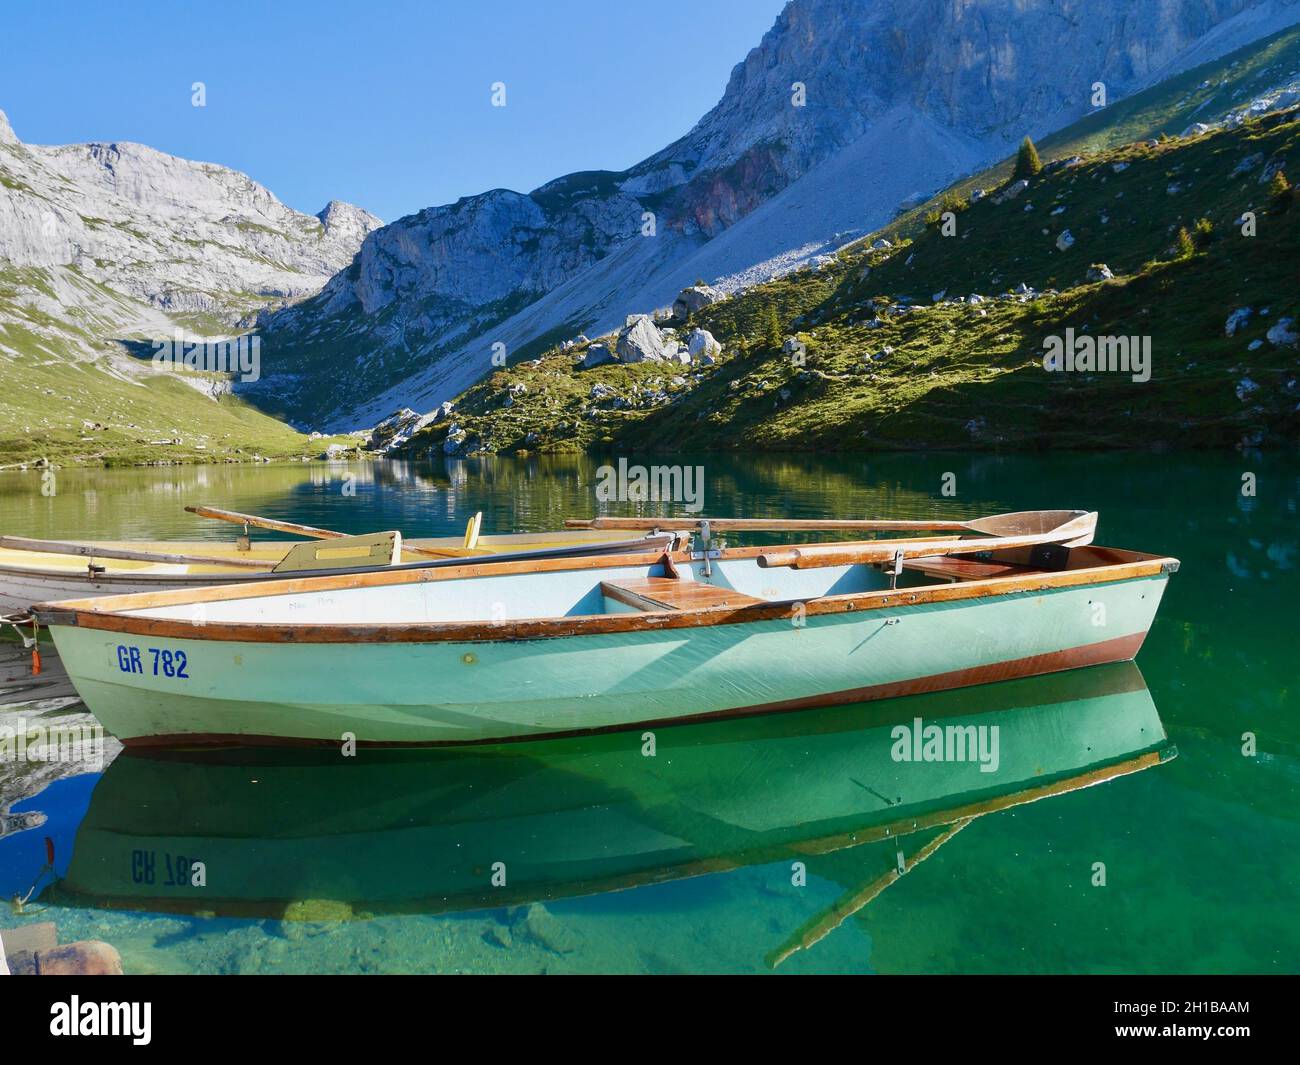 Boats in emerald-green Lake Partnun in Praettigau, Graubuenden, Switzerland. Stock Photo